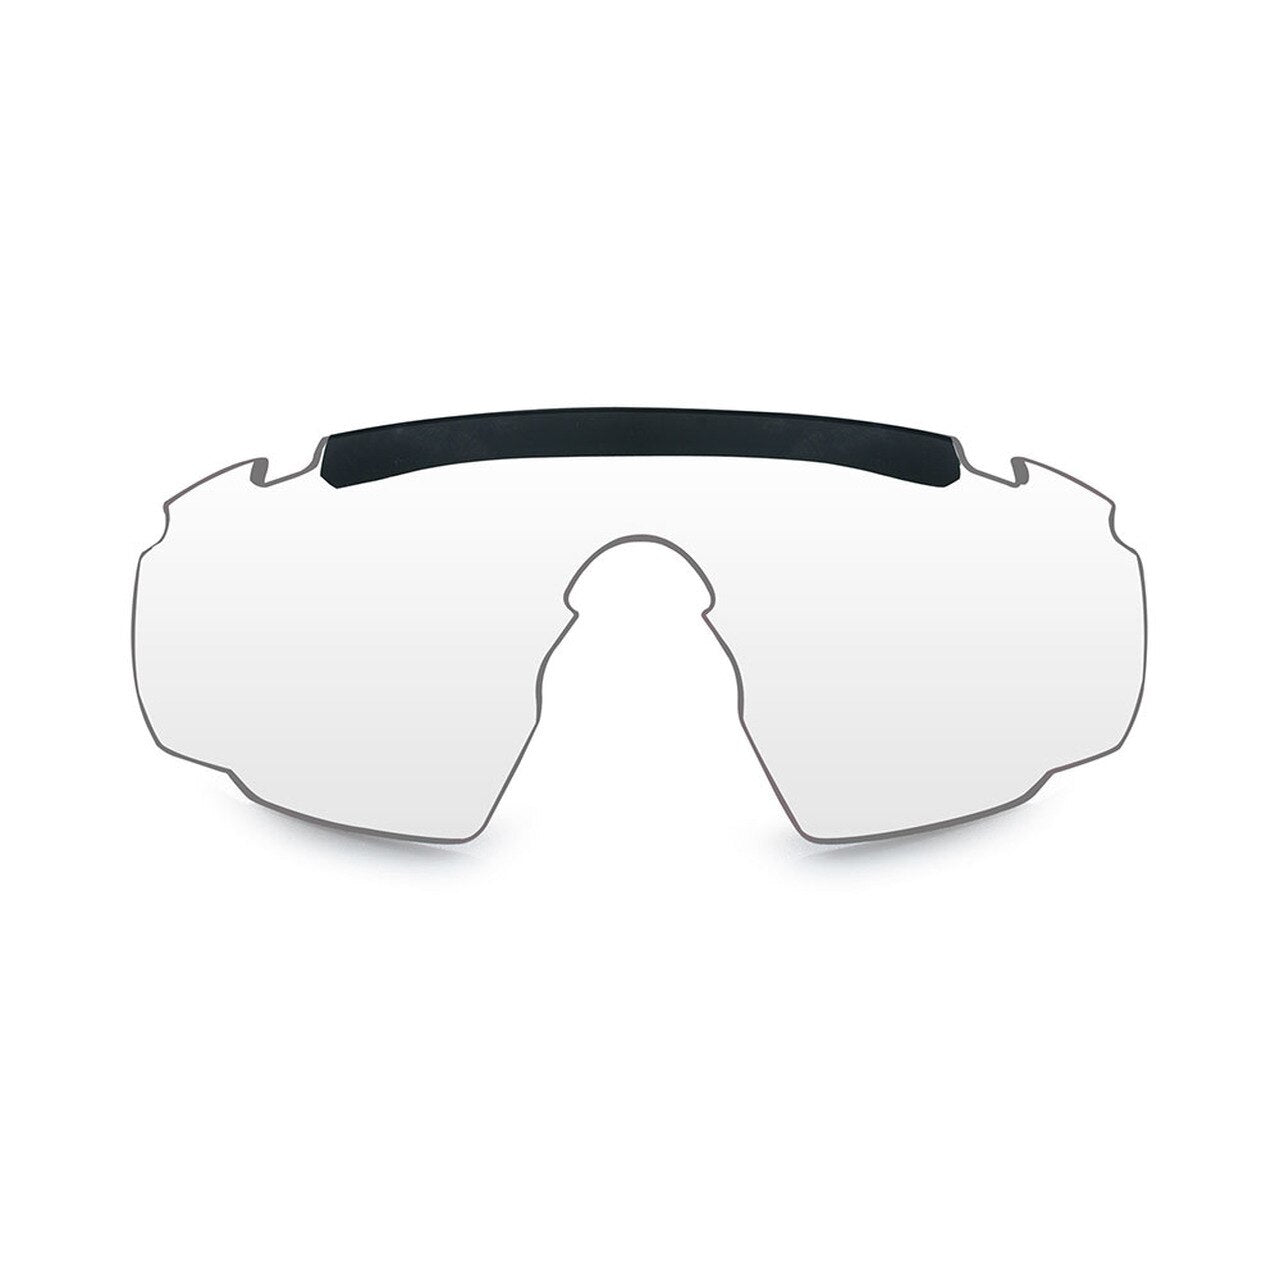 Wiley X Saber Advanced Eyeshield Clear Lens Matte Black Frame Eyewear Wiley X Tactical Gear Supplier Tactical Distributors Australia